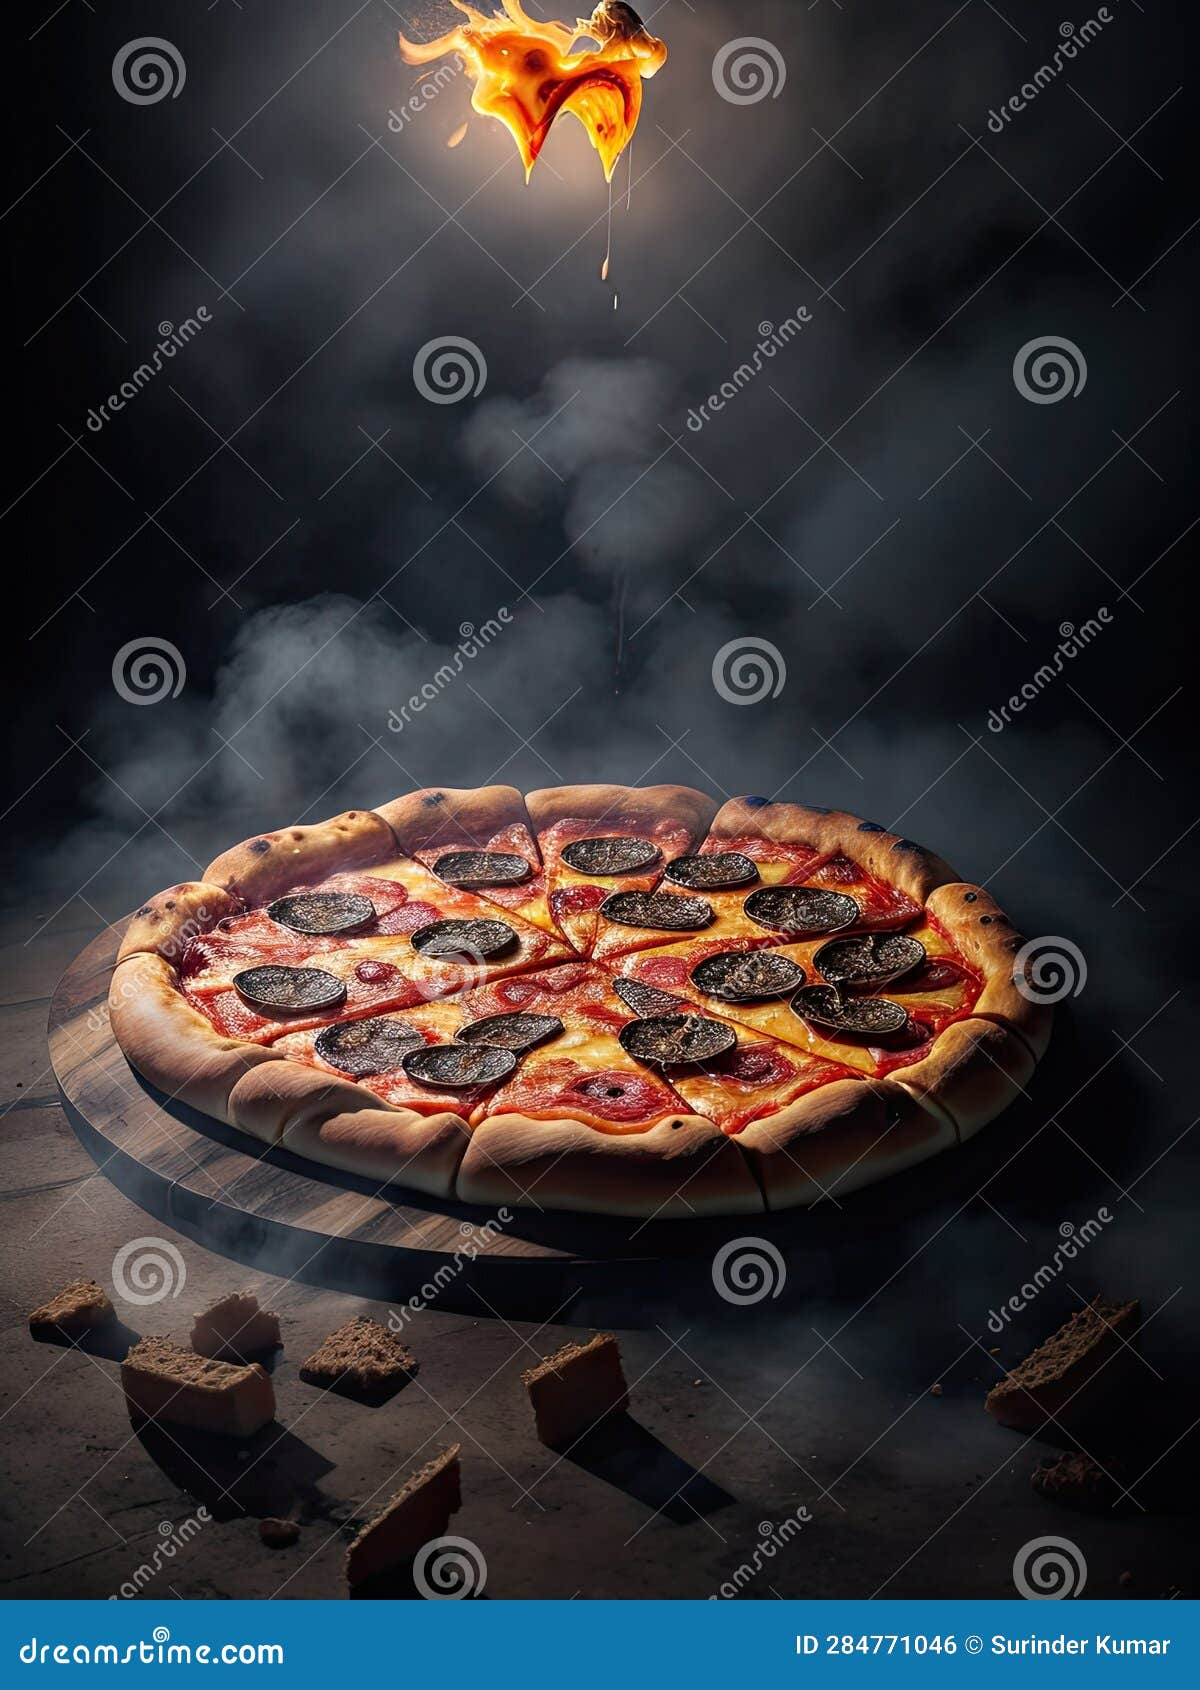 un impresionante fotografia de una porciÃ³n de pizza